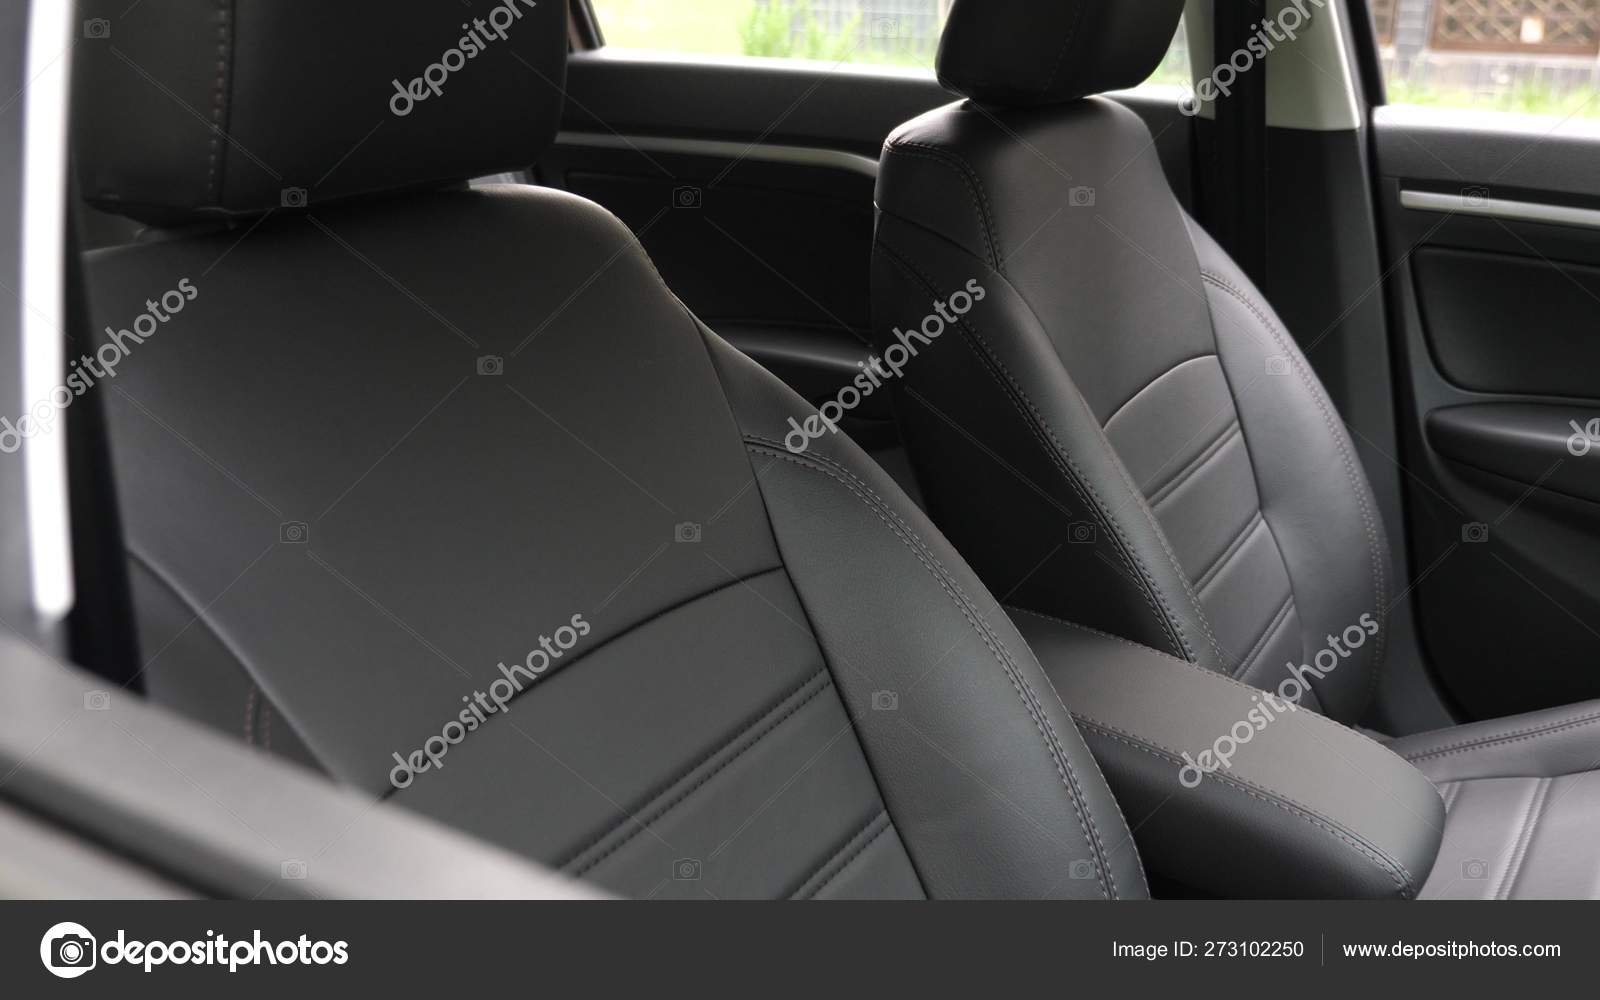 https://st4.depositphotos.com/4287599/27310/i/1600/depositphotos_273102250-stock-photo-luxury-leather-seats-in-the.jpg